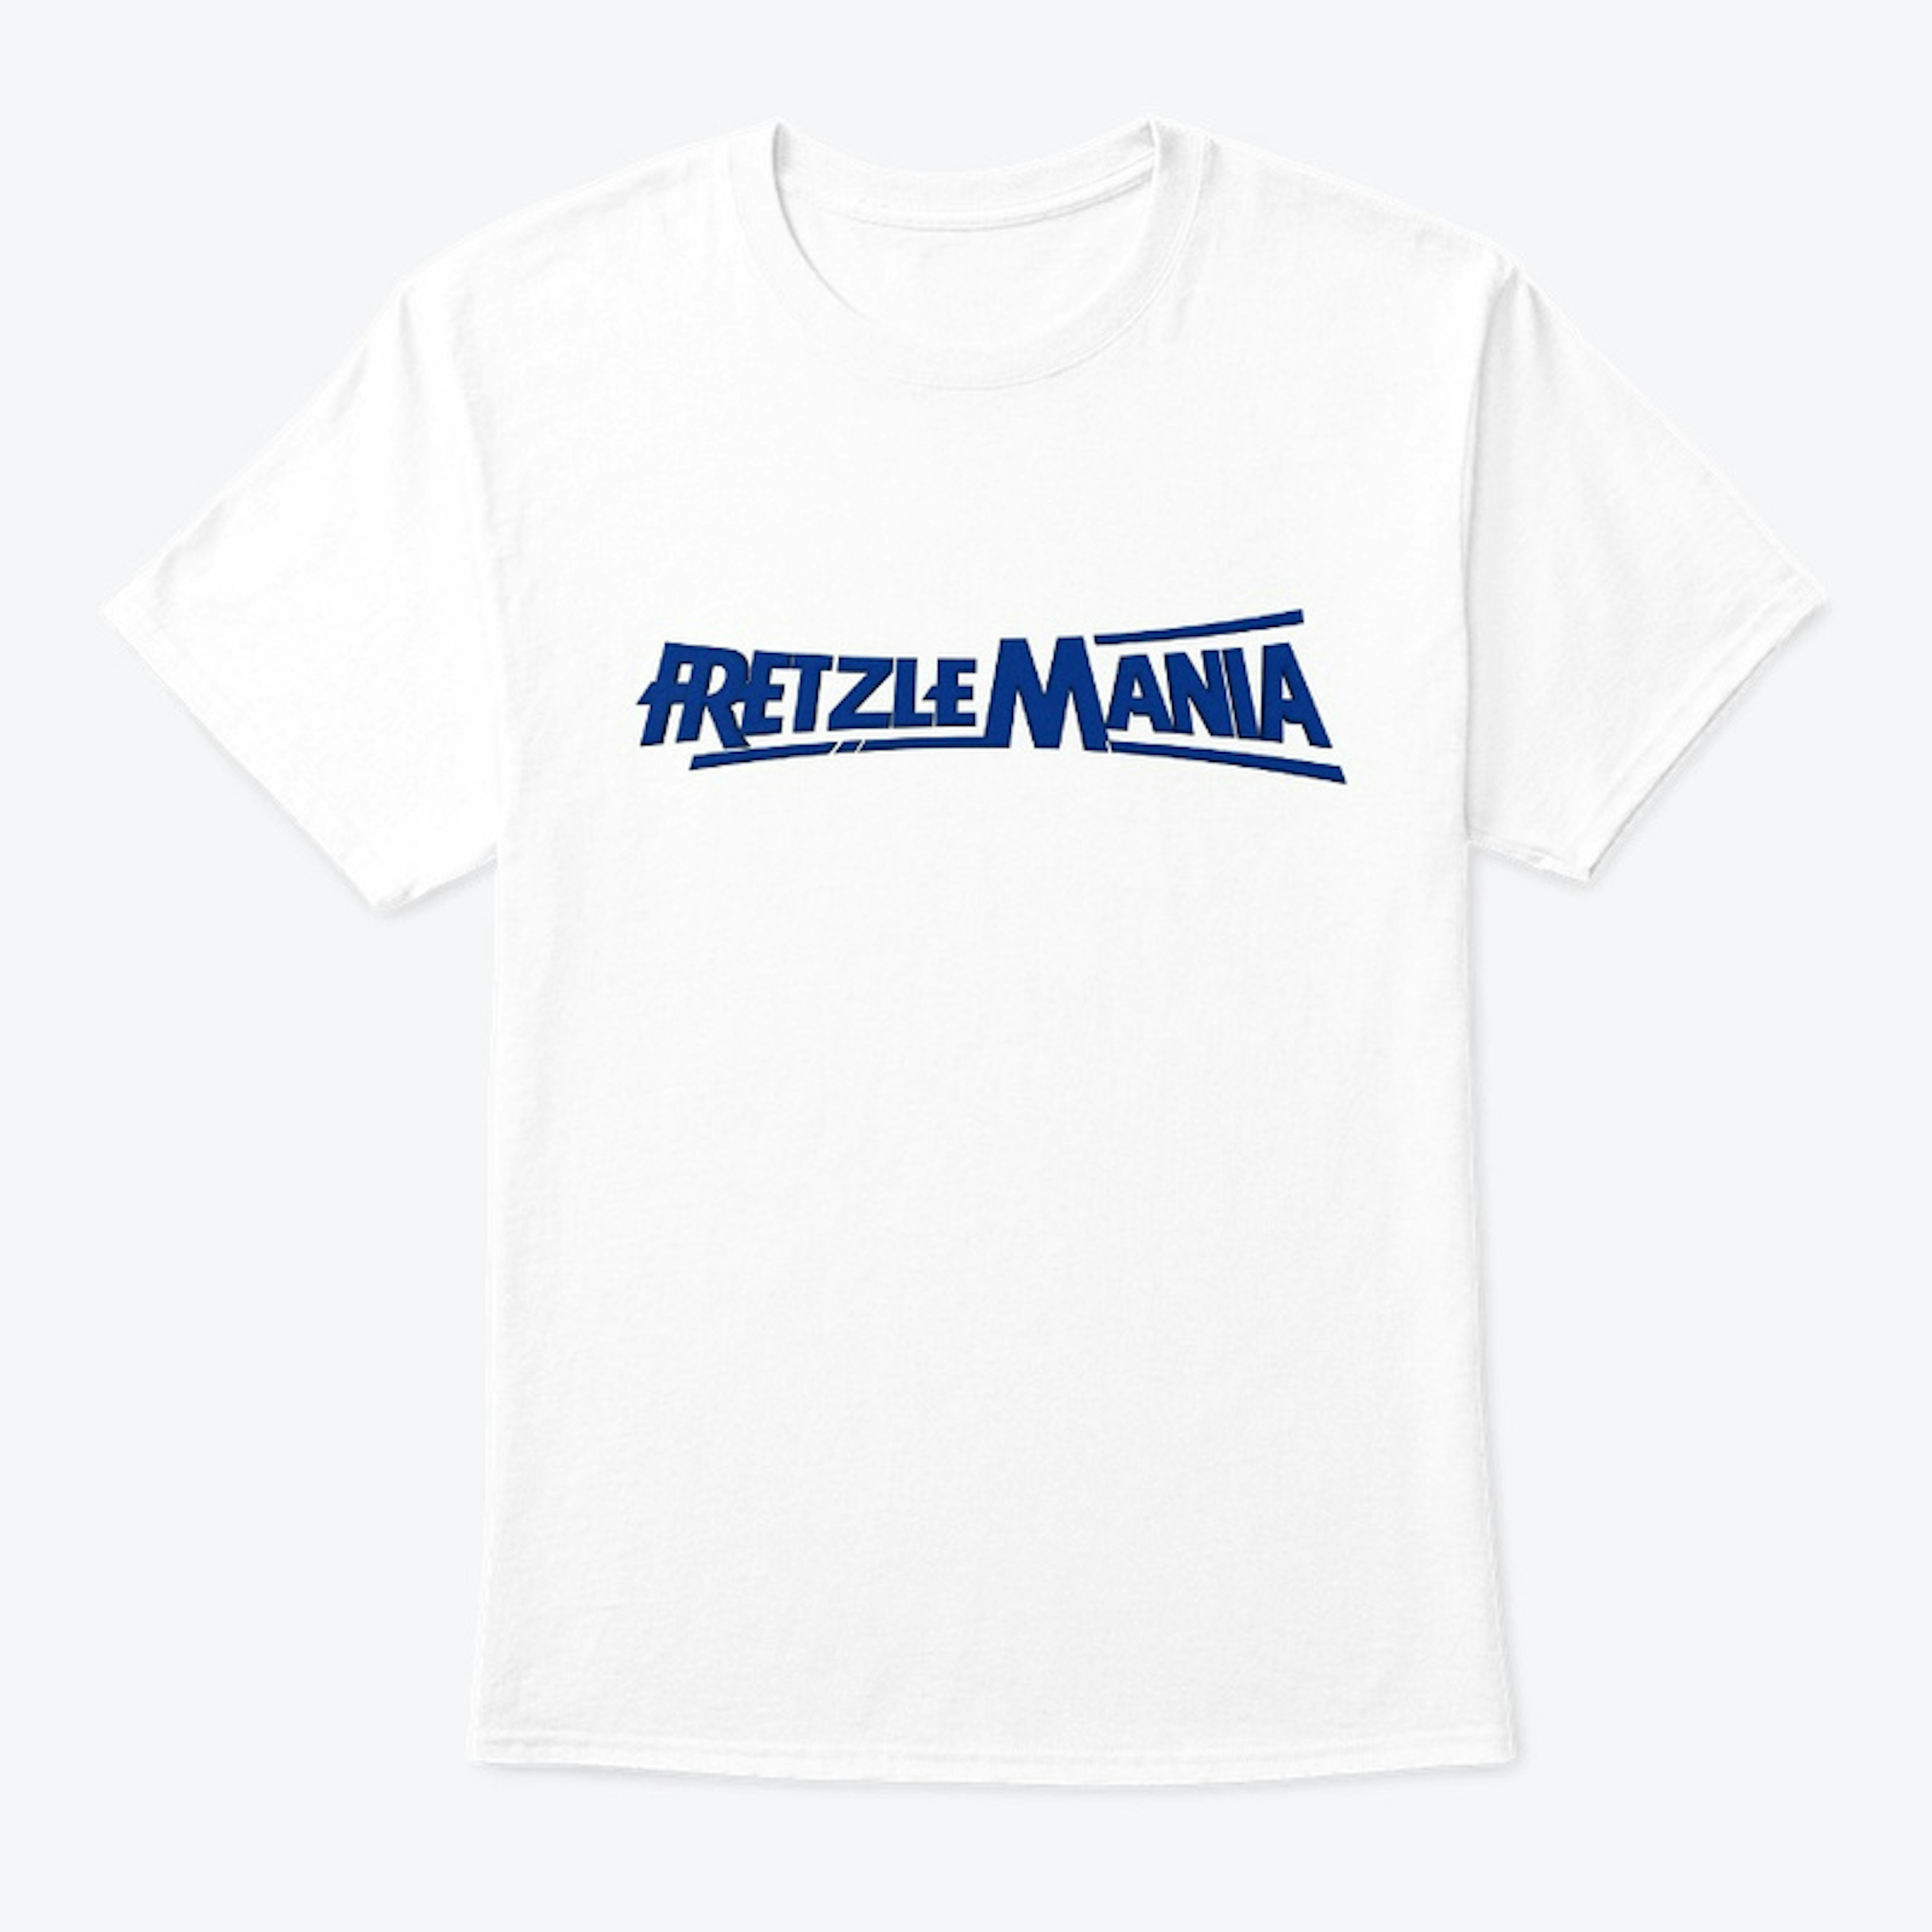 FretzleMania 2.0 Clothing Collection